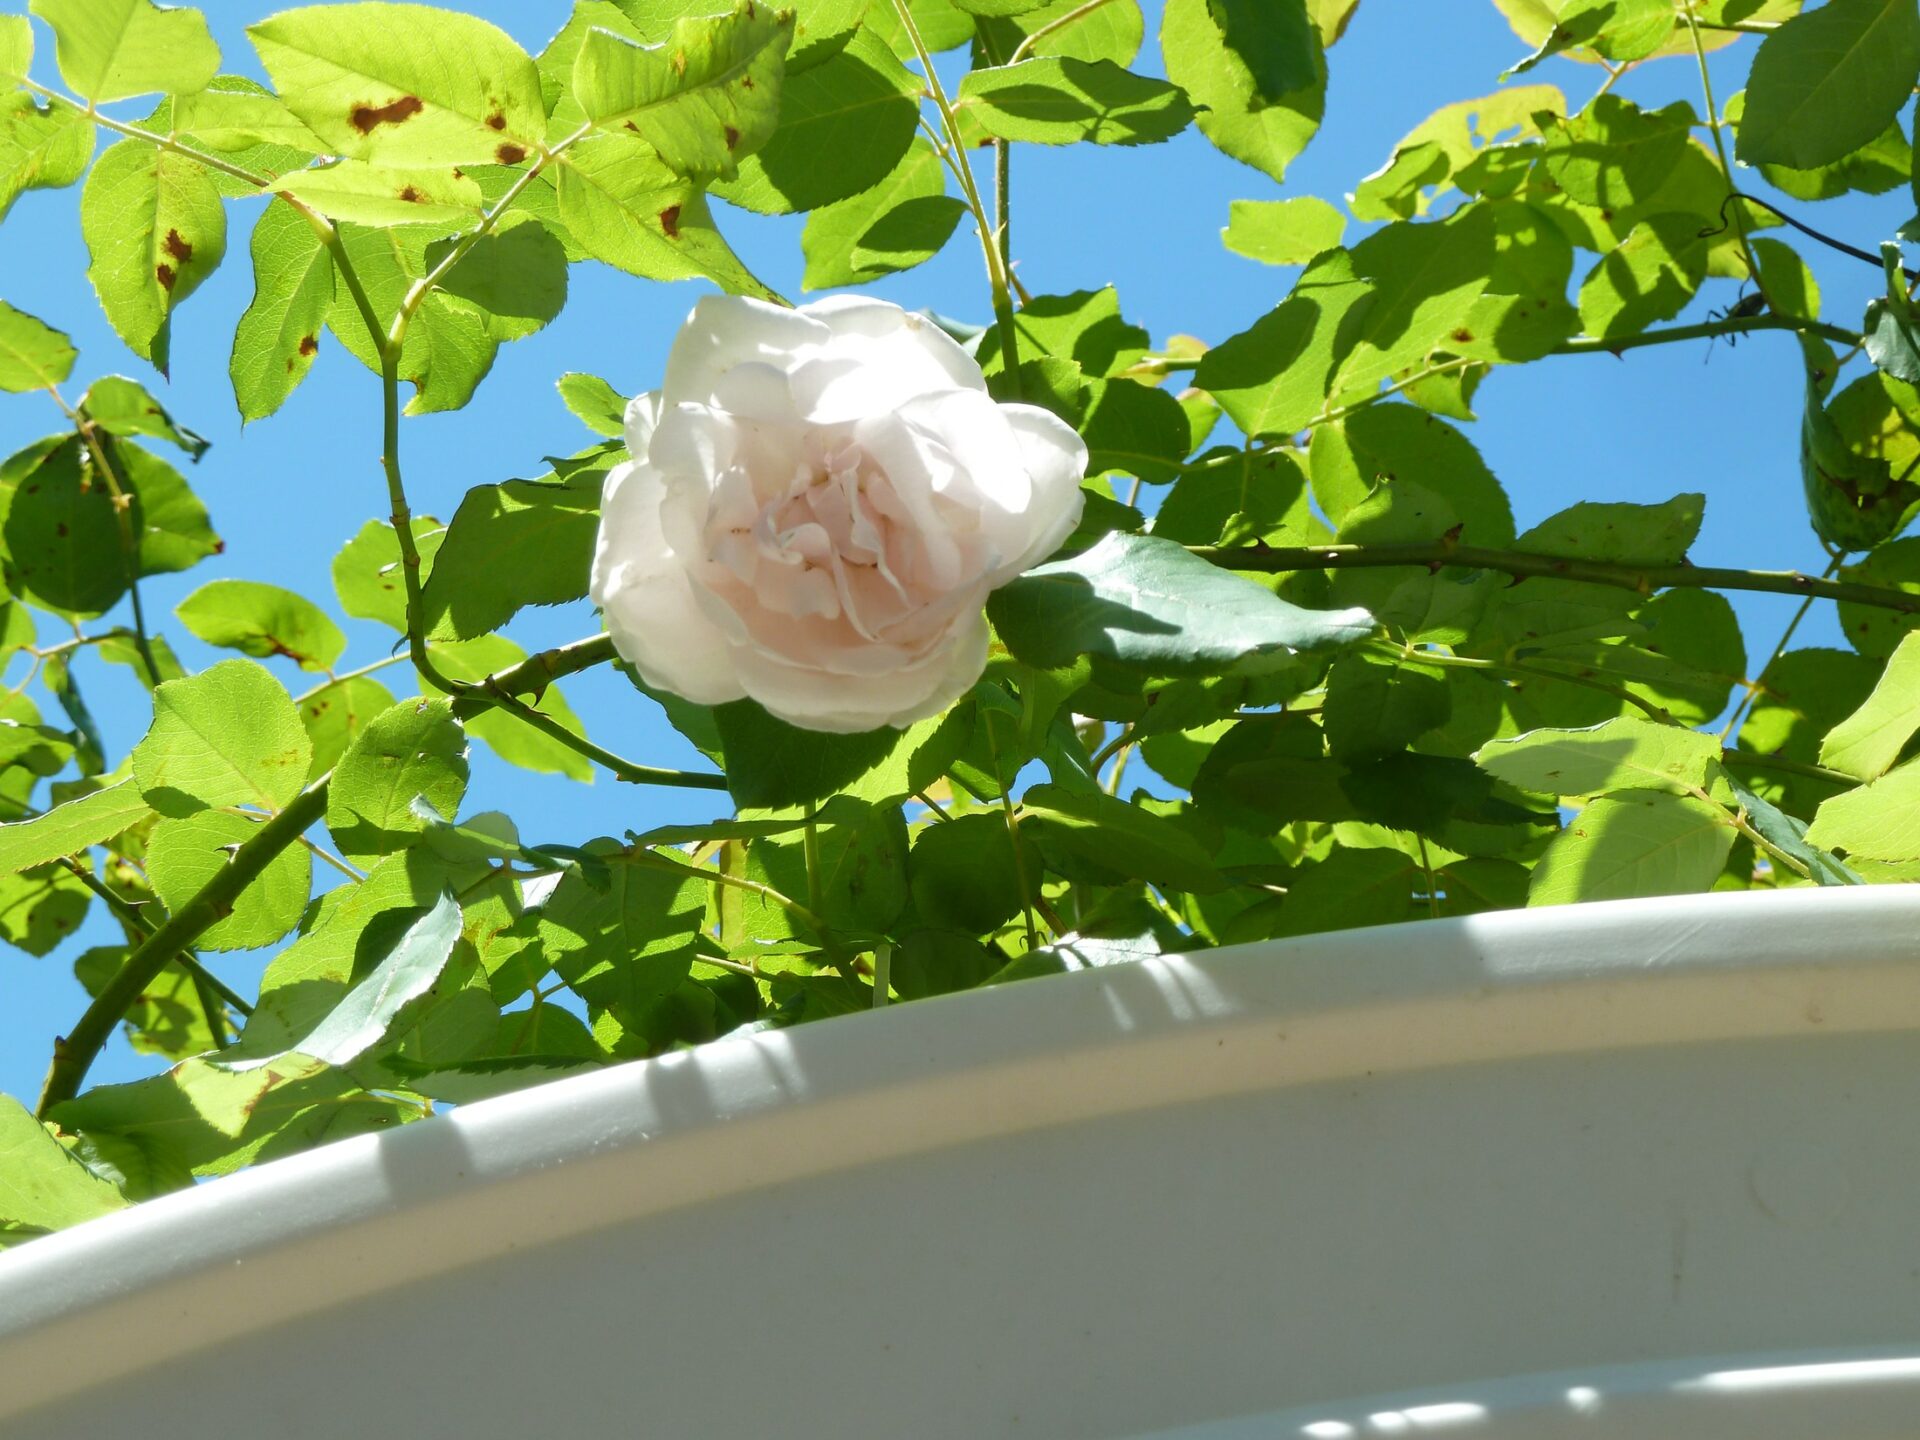 Antique Rose Celine Forestier